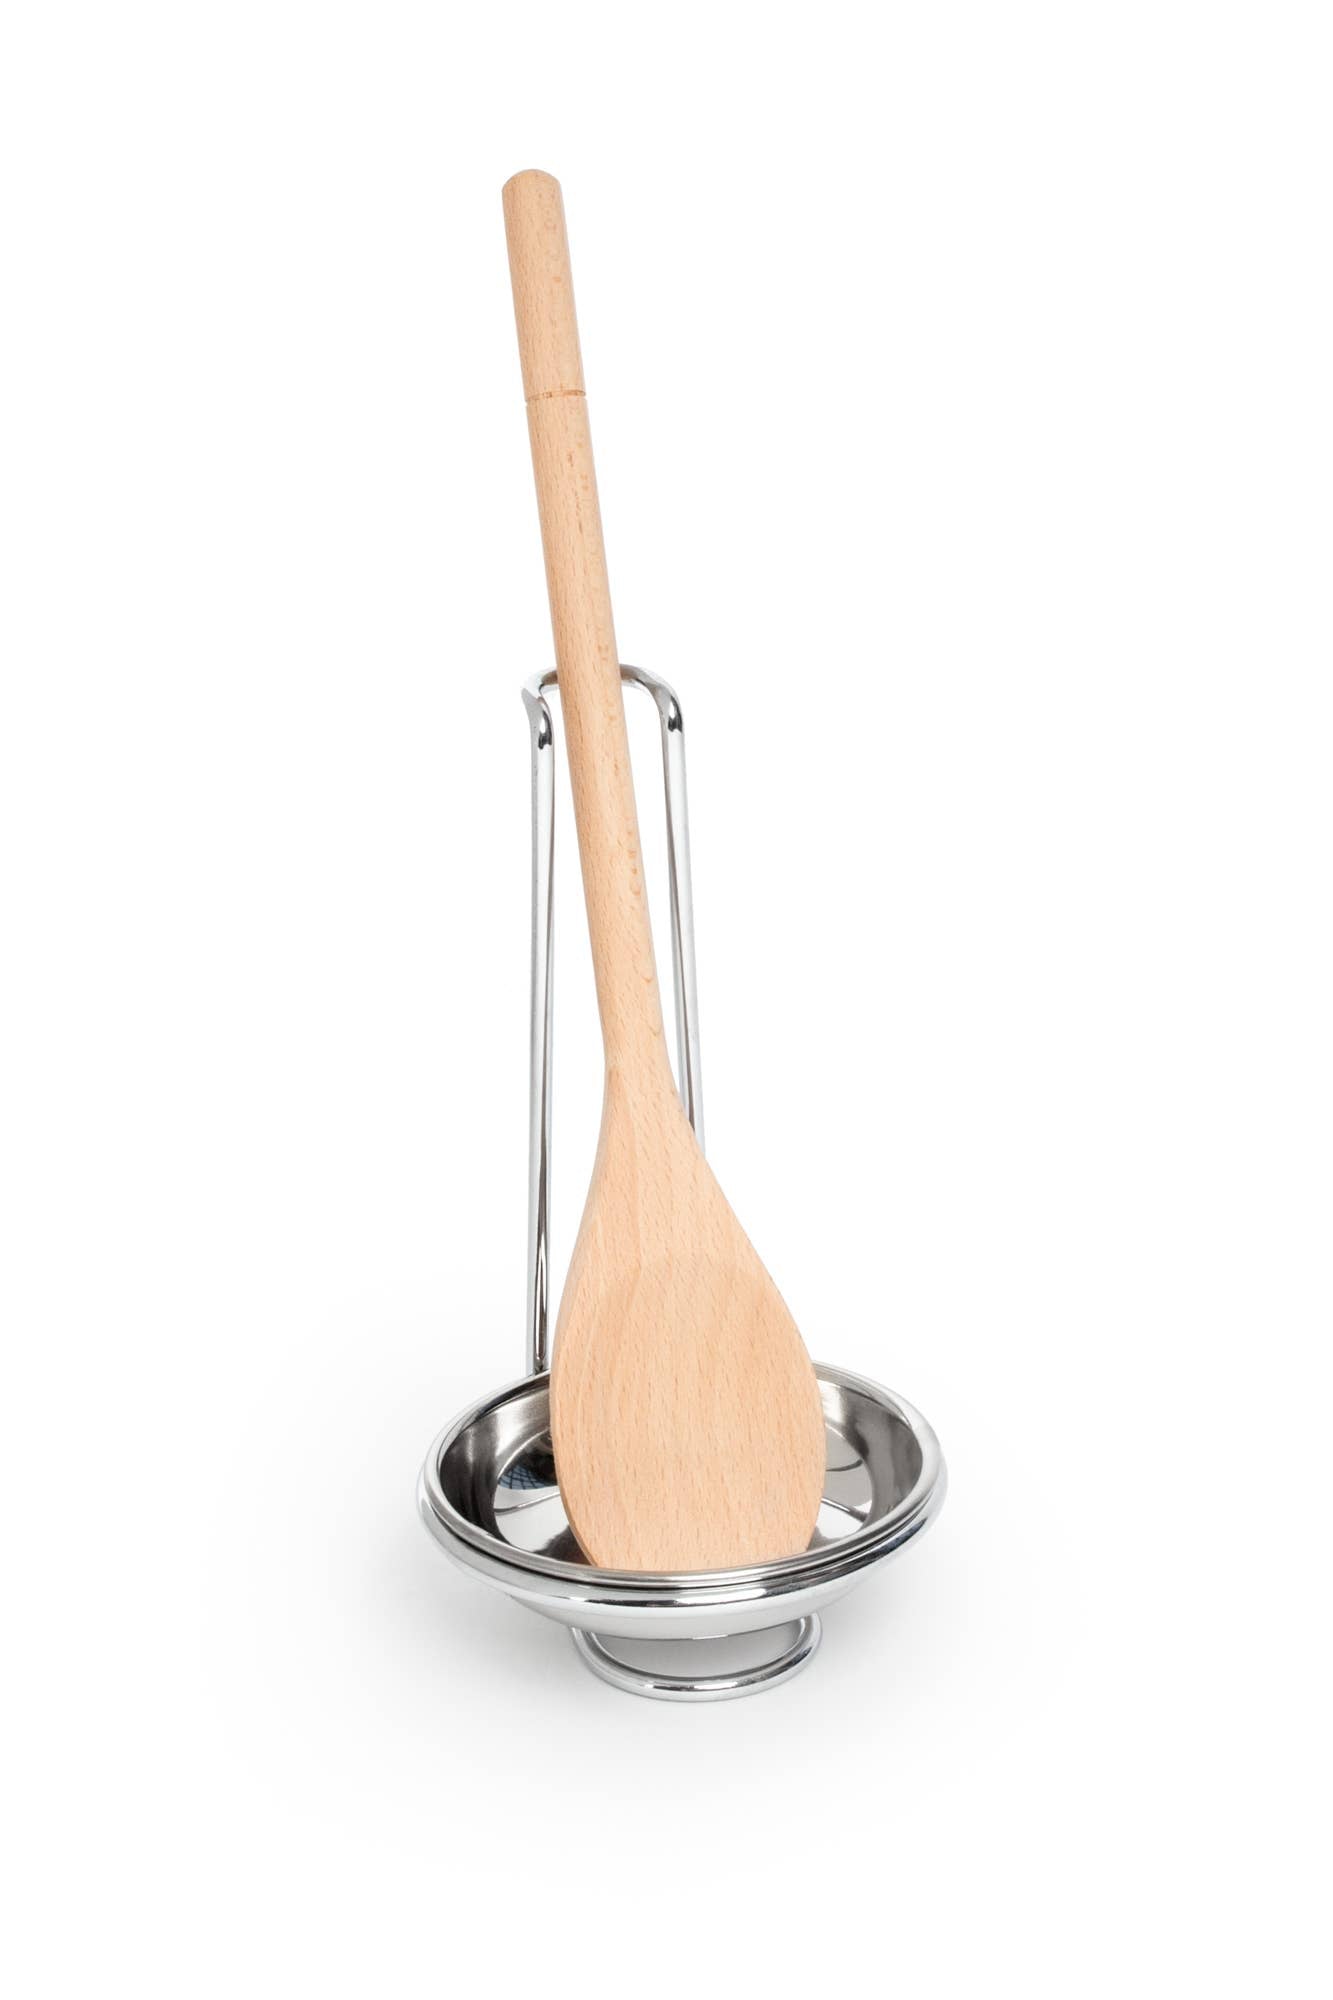 Spoon Rest: Vertical Spoon Rest - Holder